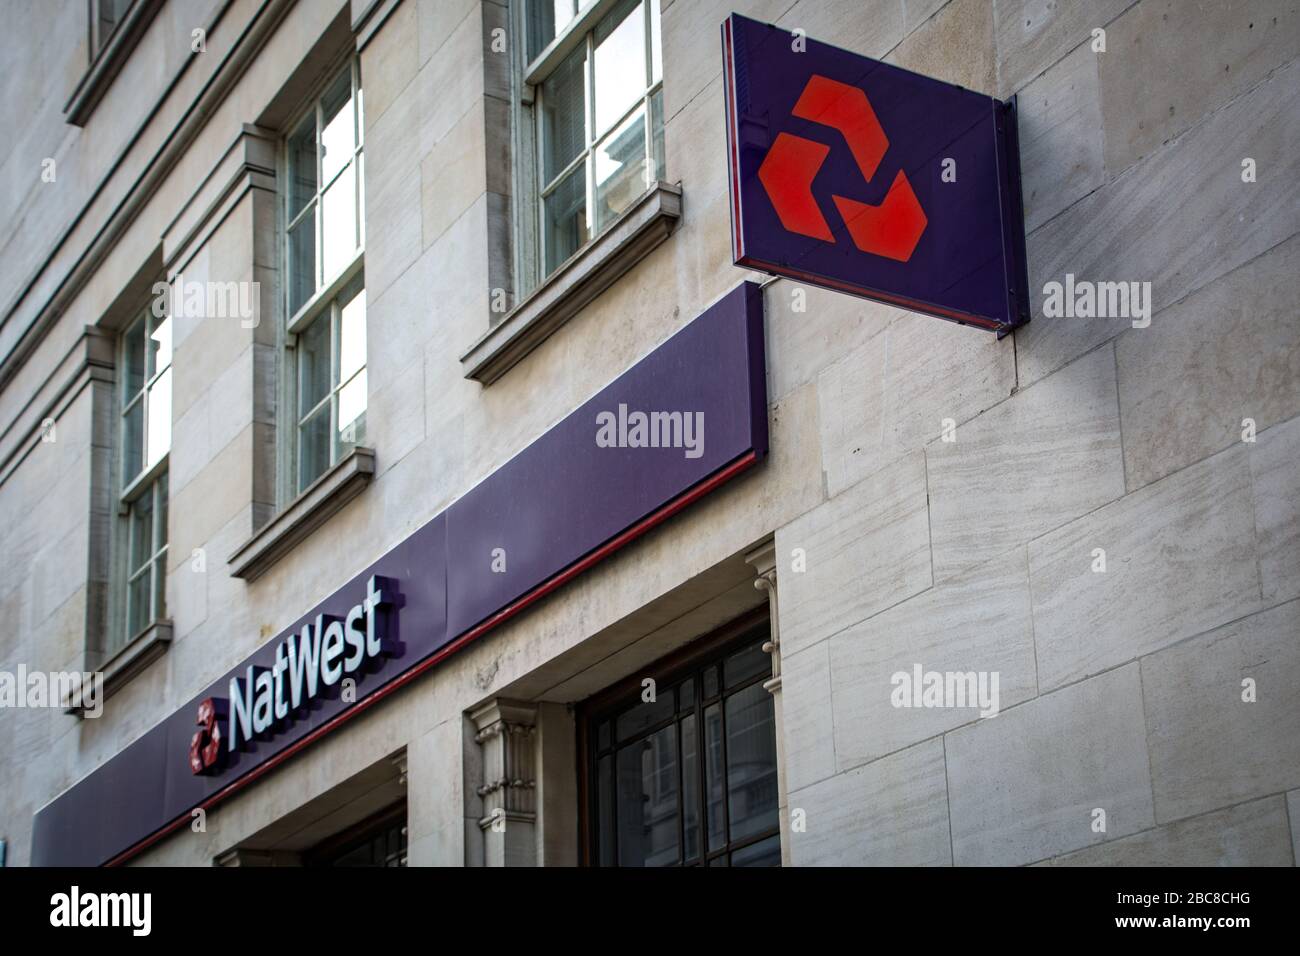 NatWest- filiale britannica hgih Street bank, logo esterno / segnaletica- Londra Foto Stock